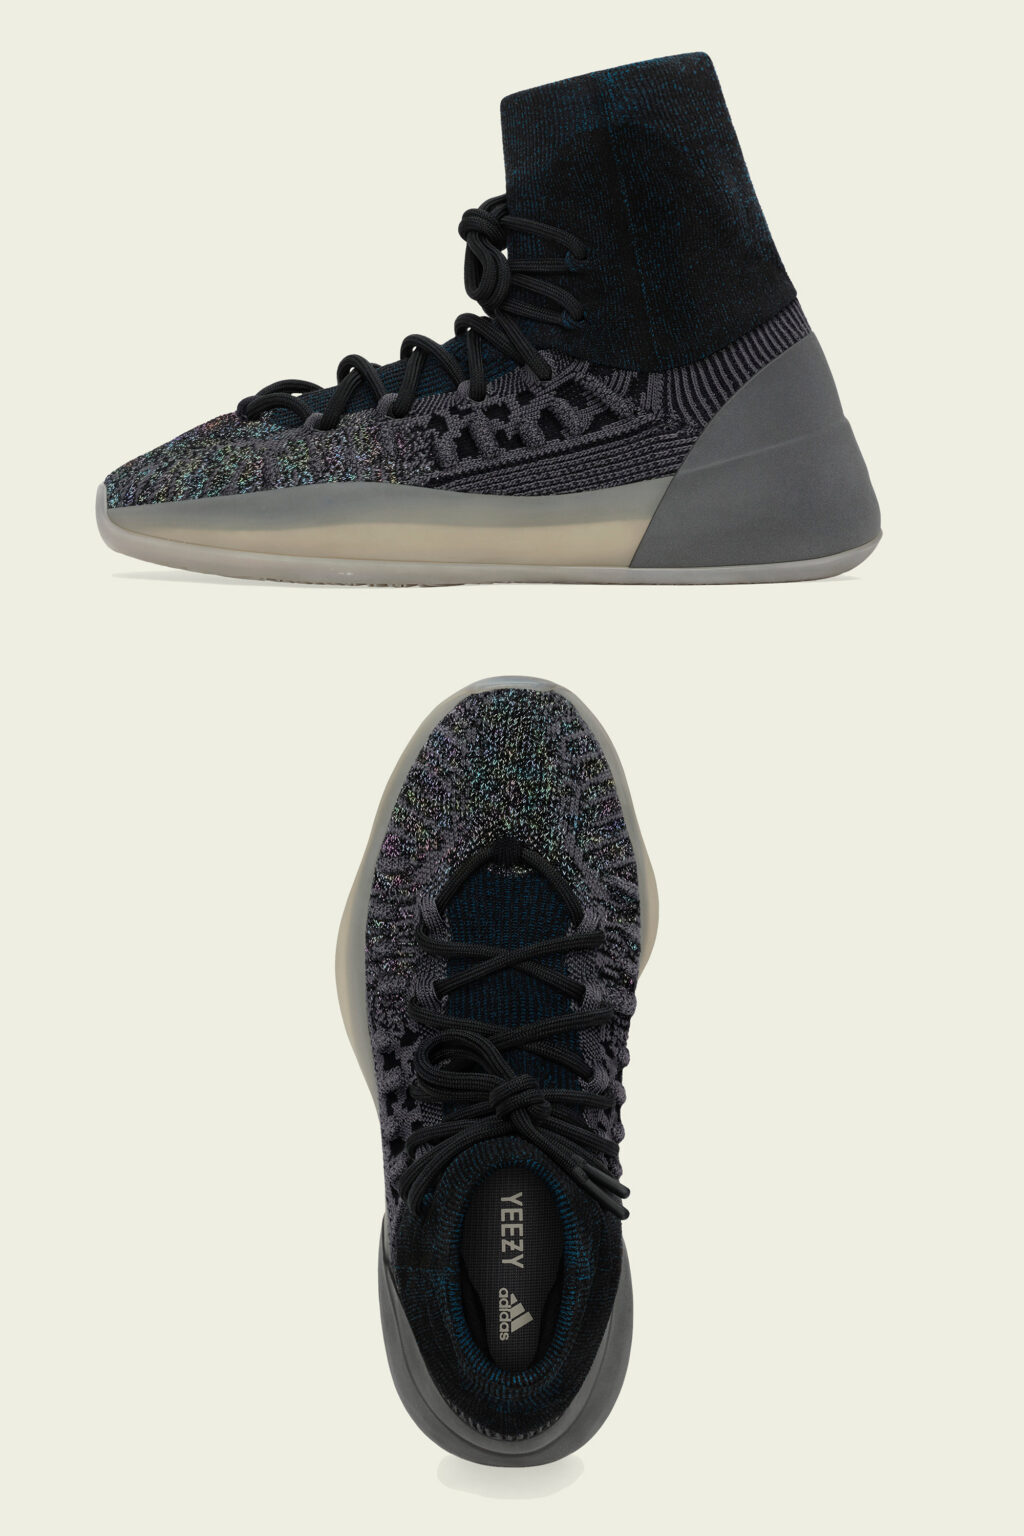 adidas YZY BSKTBL Knit – Slate Blue | sneakerb0b RELEASES